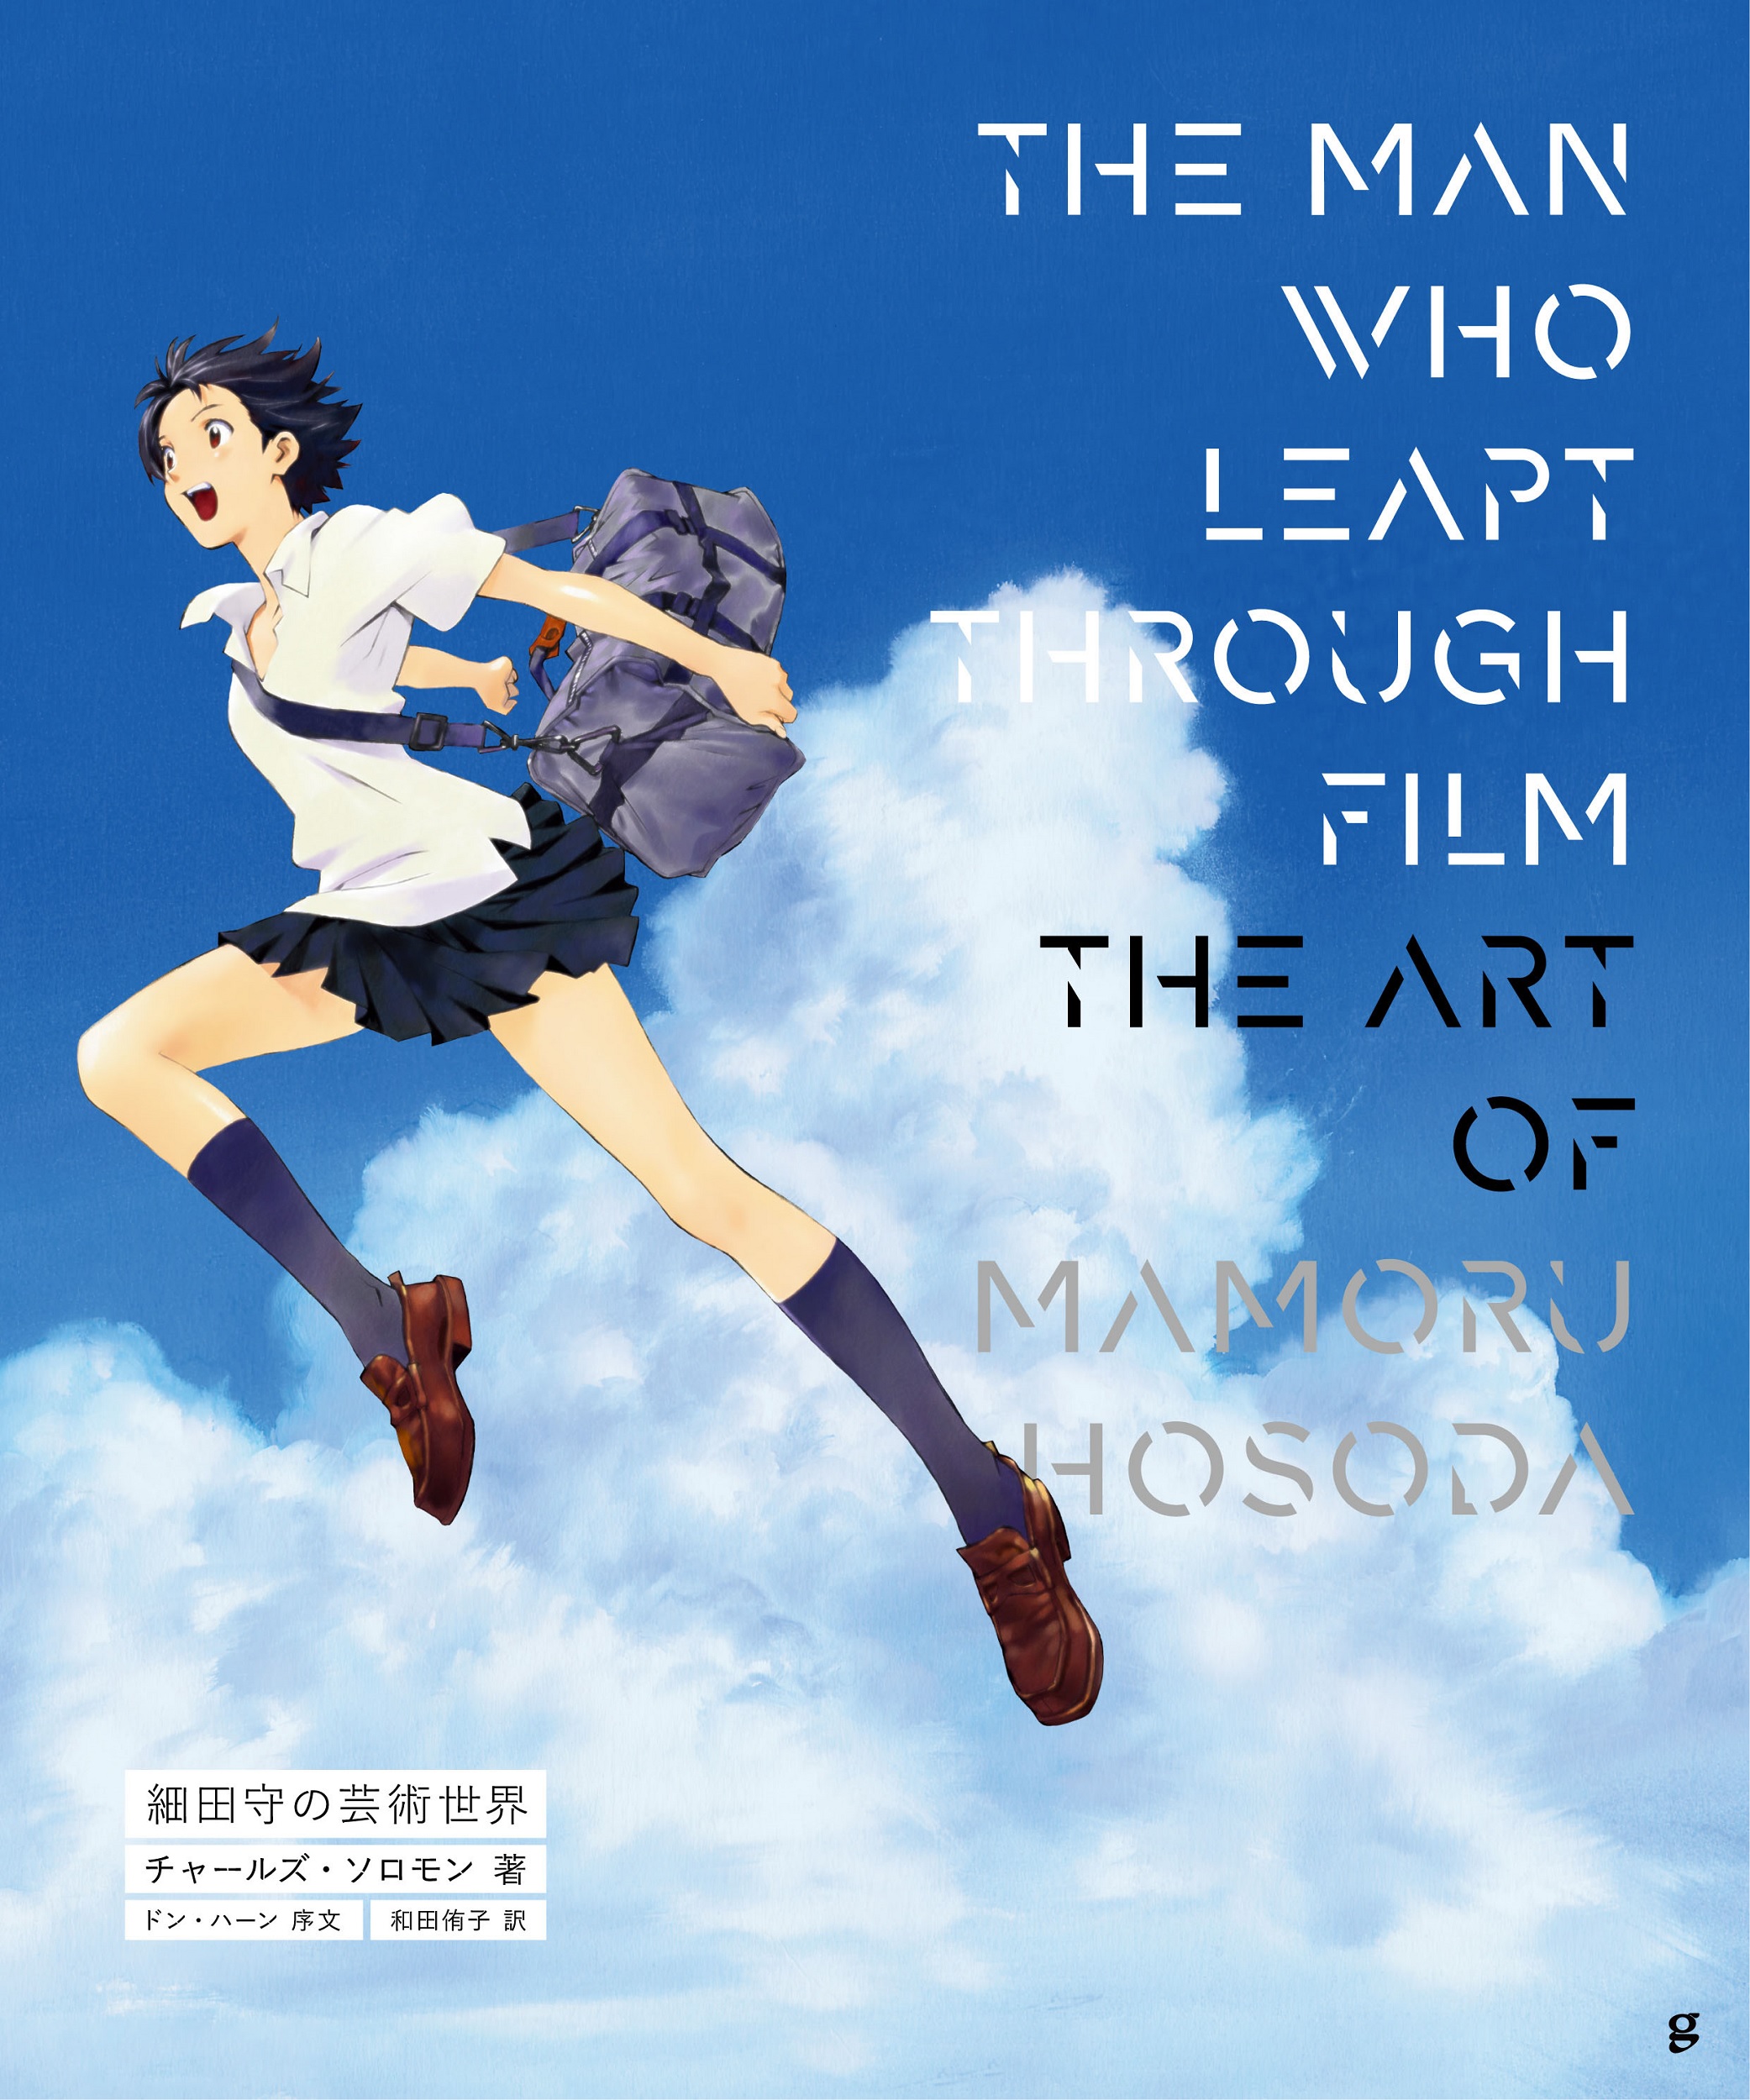 THE MAN WHO LEAPT THROUGH FILM  細田守の芸術世界の商品画像